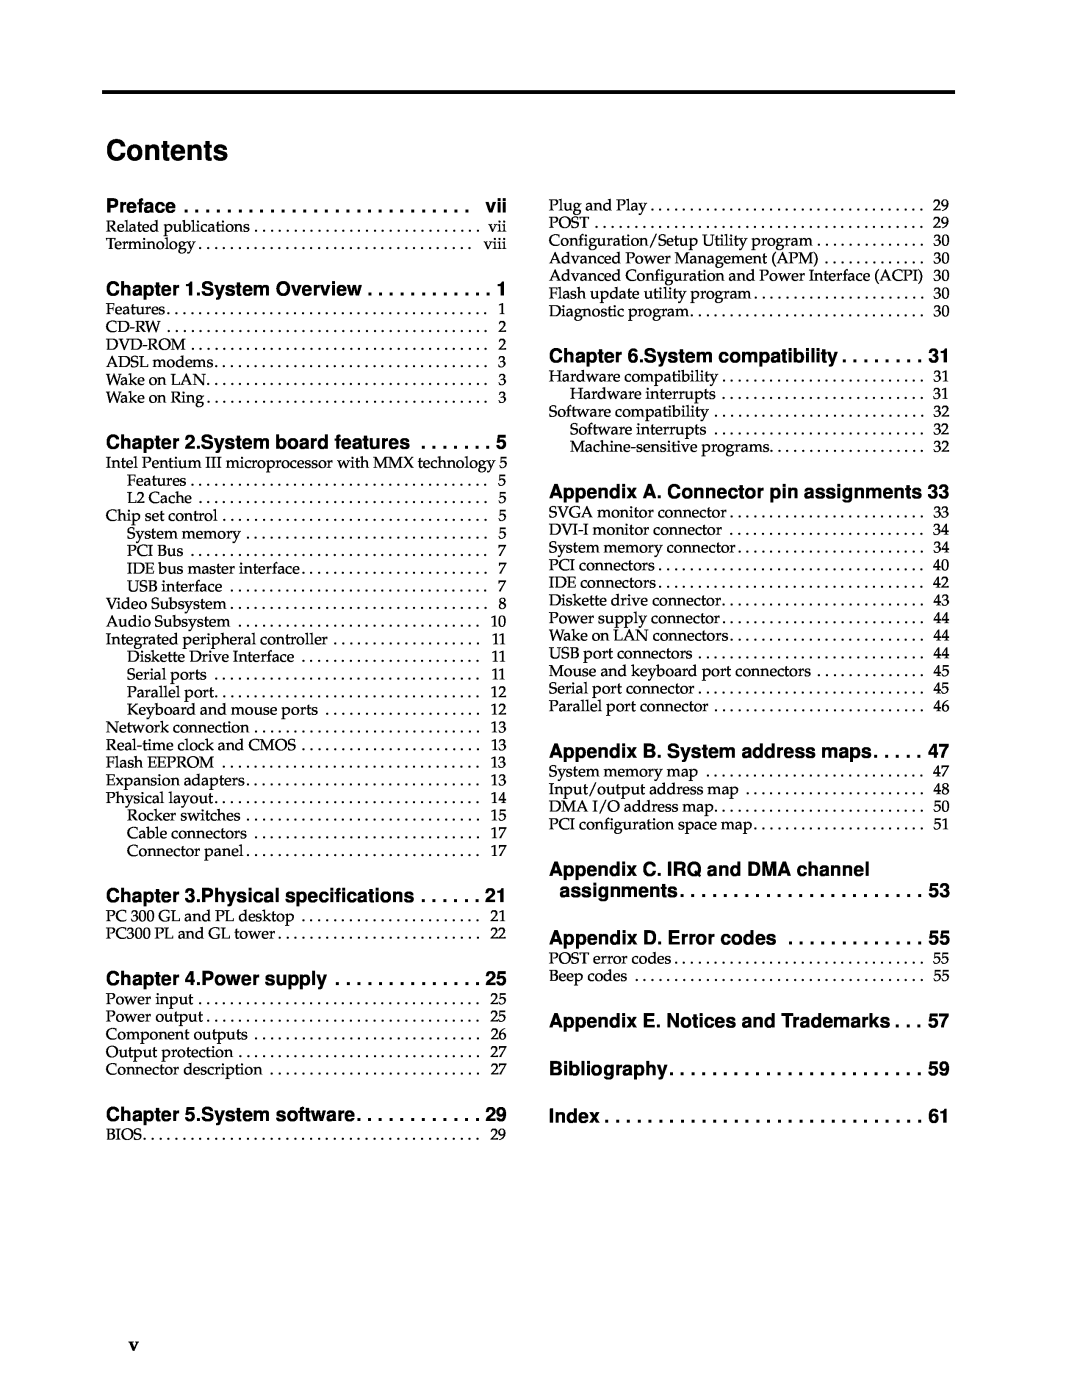 IBM PC 300GL manual Contents 